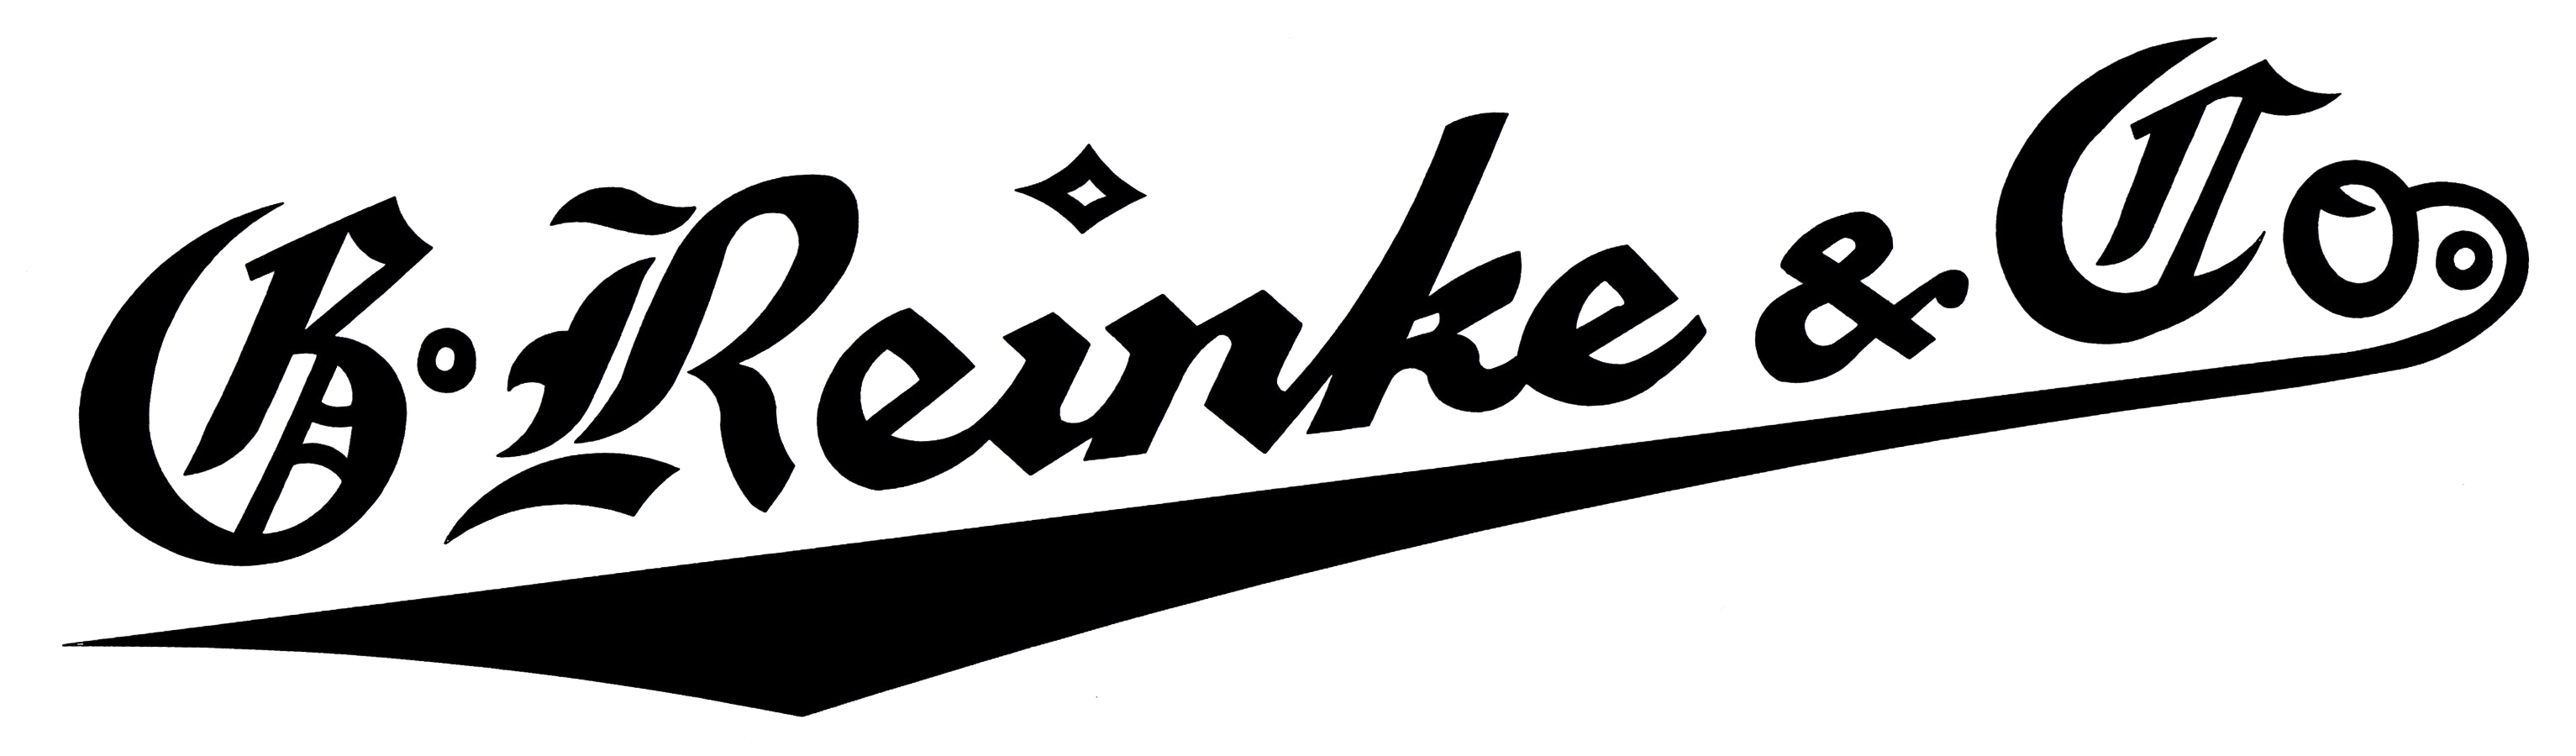 Reinke Logo - Monument Business in Oshkosh, WI | G. Reinke & Company Monuments